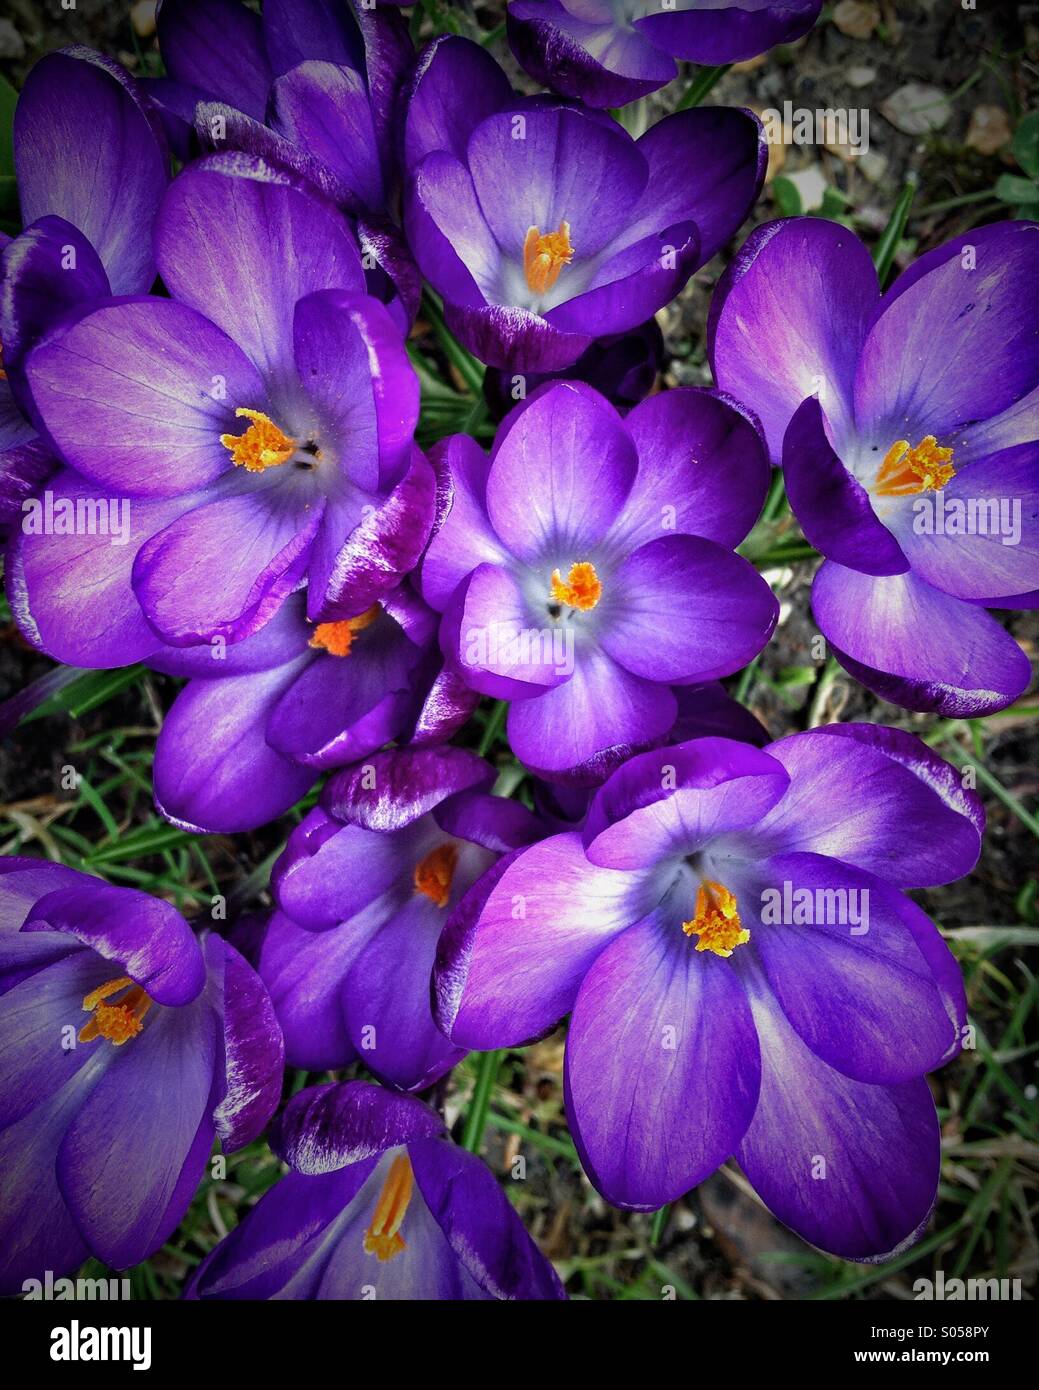 Crocus flowers Stock Photo